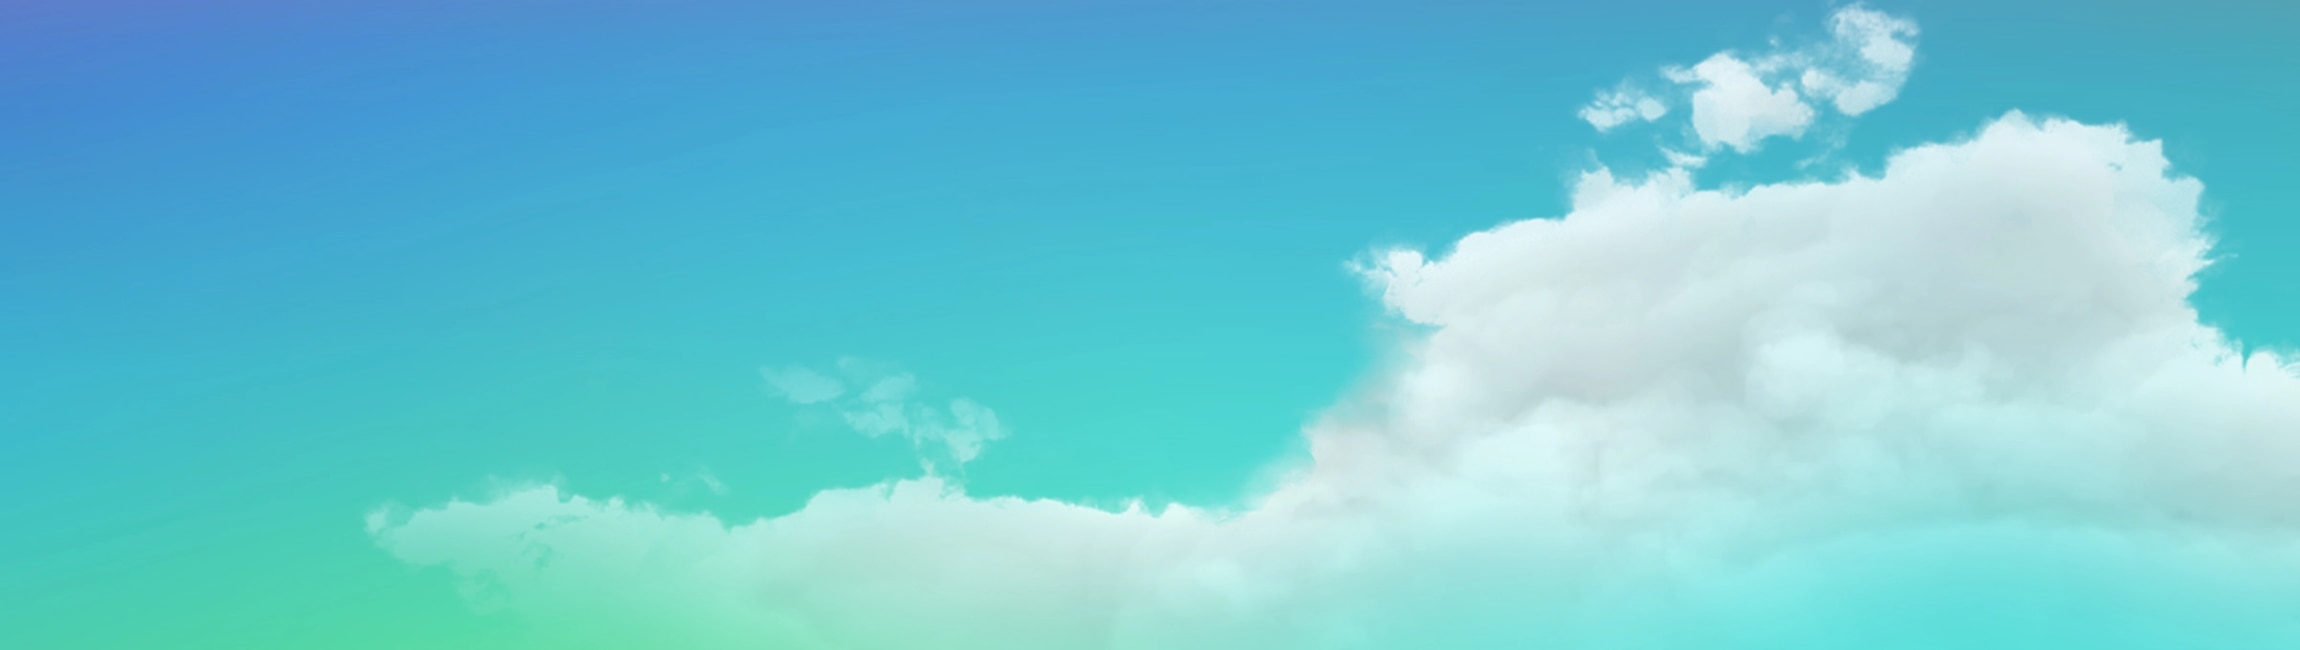 Malibu background with clouds